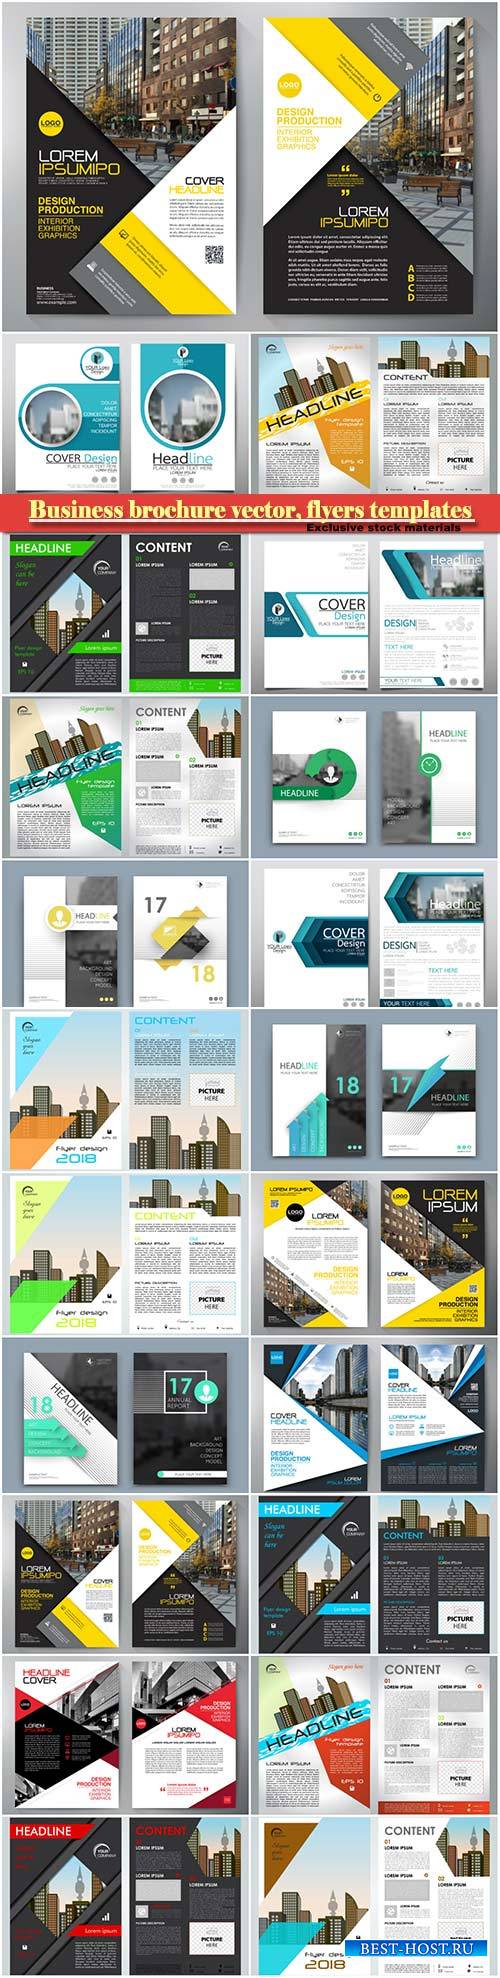 Business brochure vector, flyers templates # 33